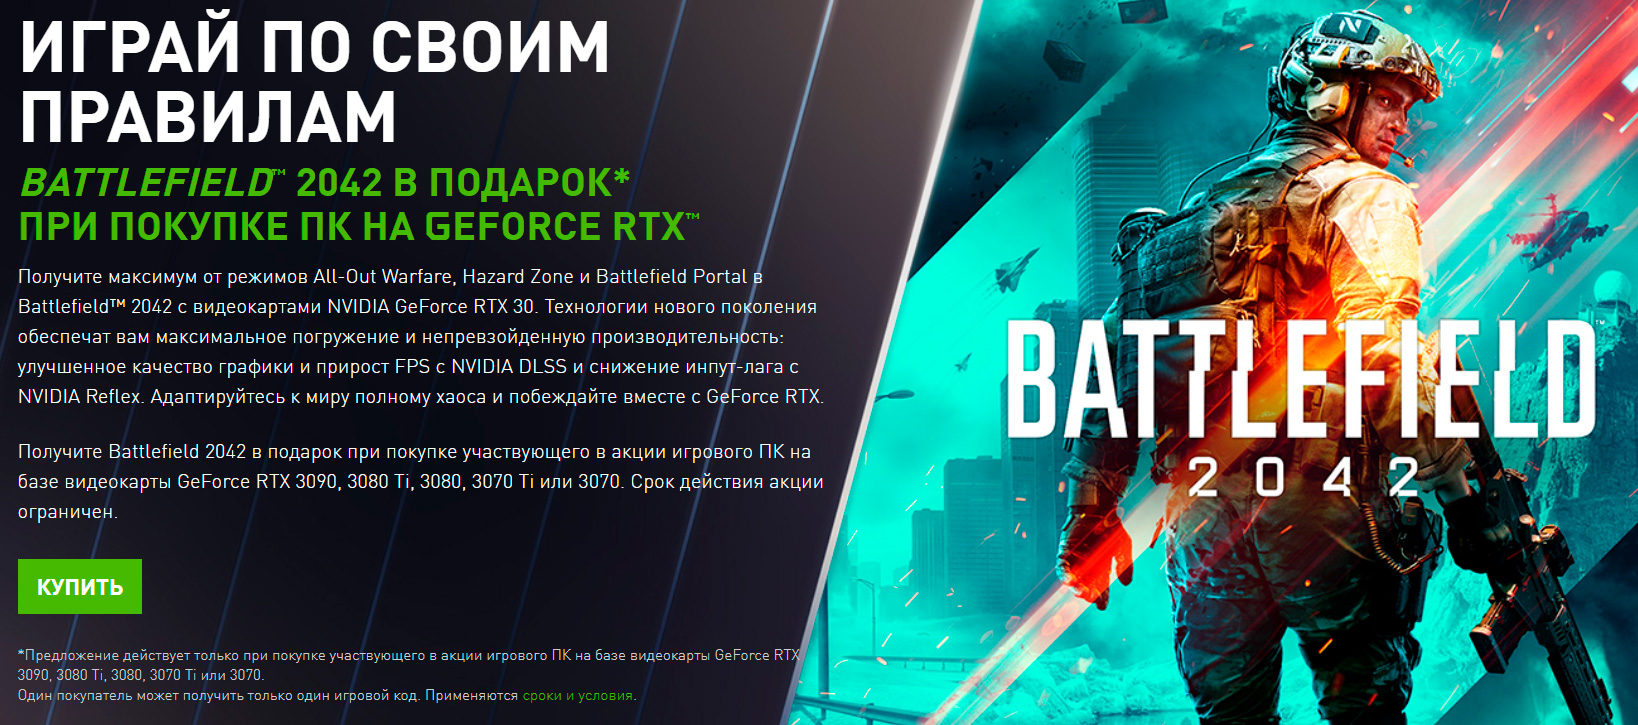 Battlefield 2042 бесплатно при покупке ПК с видеокартой NVIDIA GeForce RTX 3000